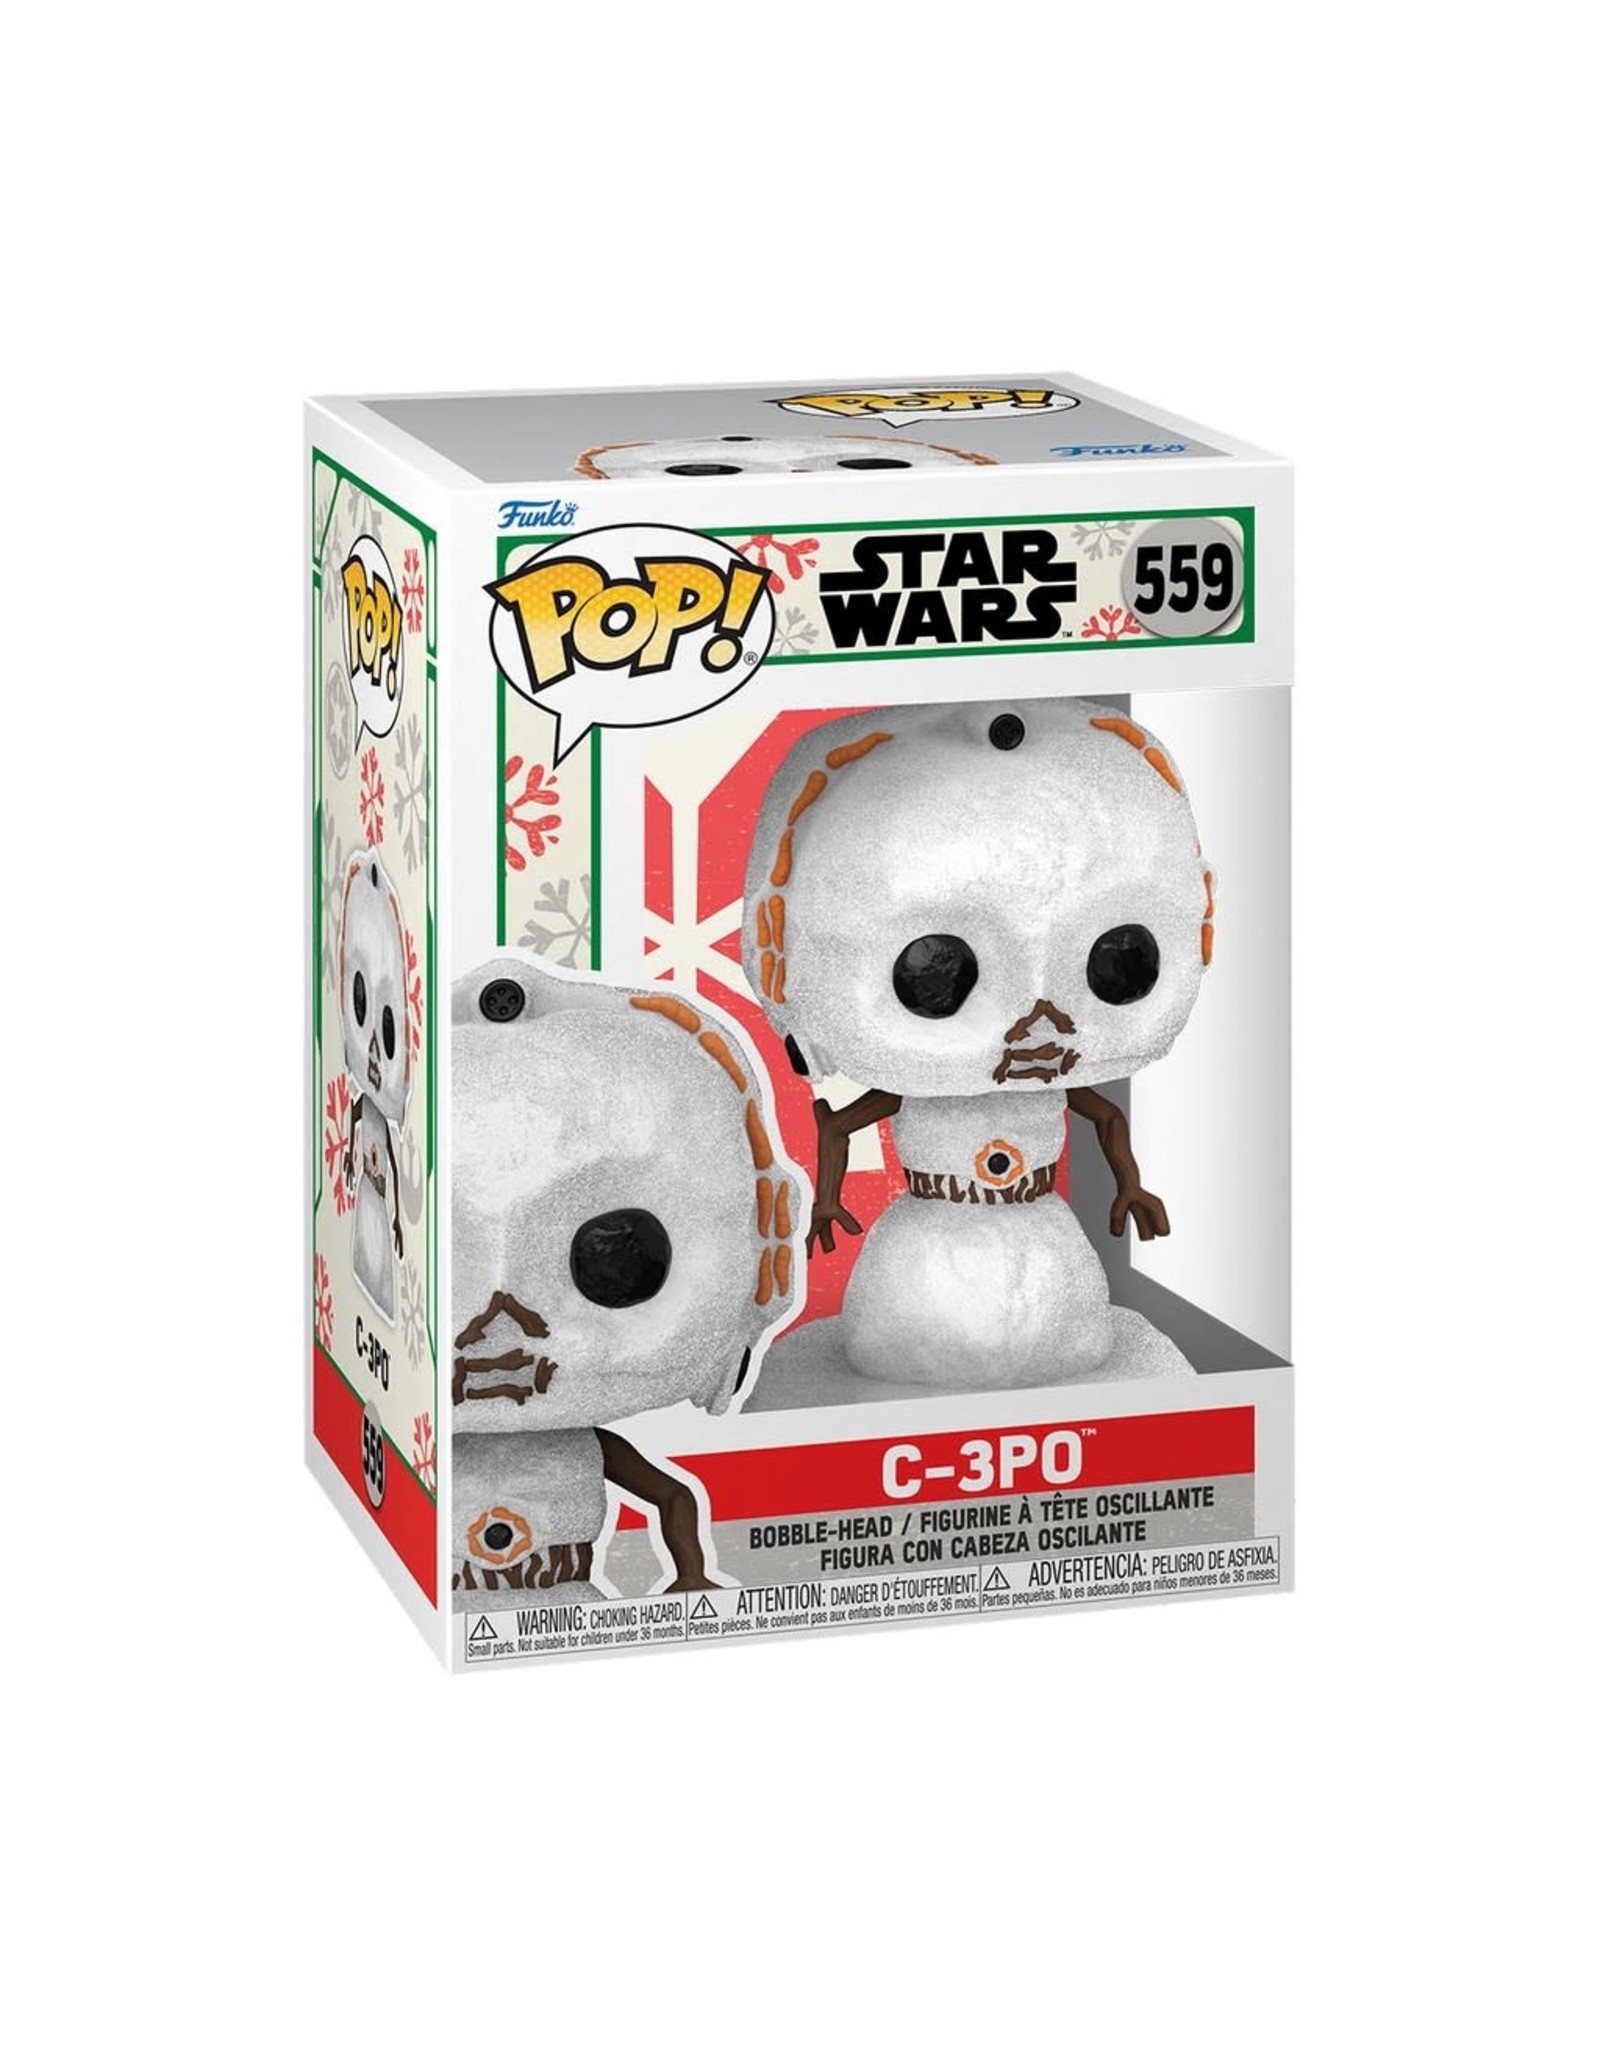 Funko Pop! Funko Pop! Star Wars nr559 C-3PO